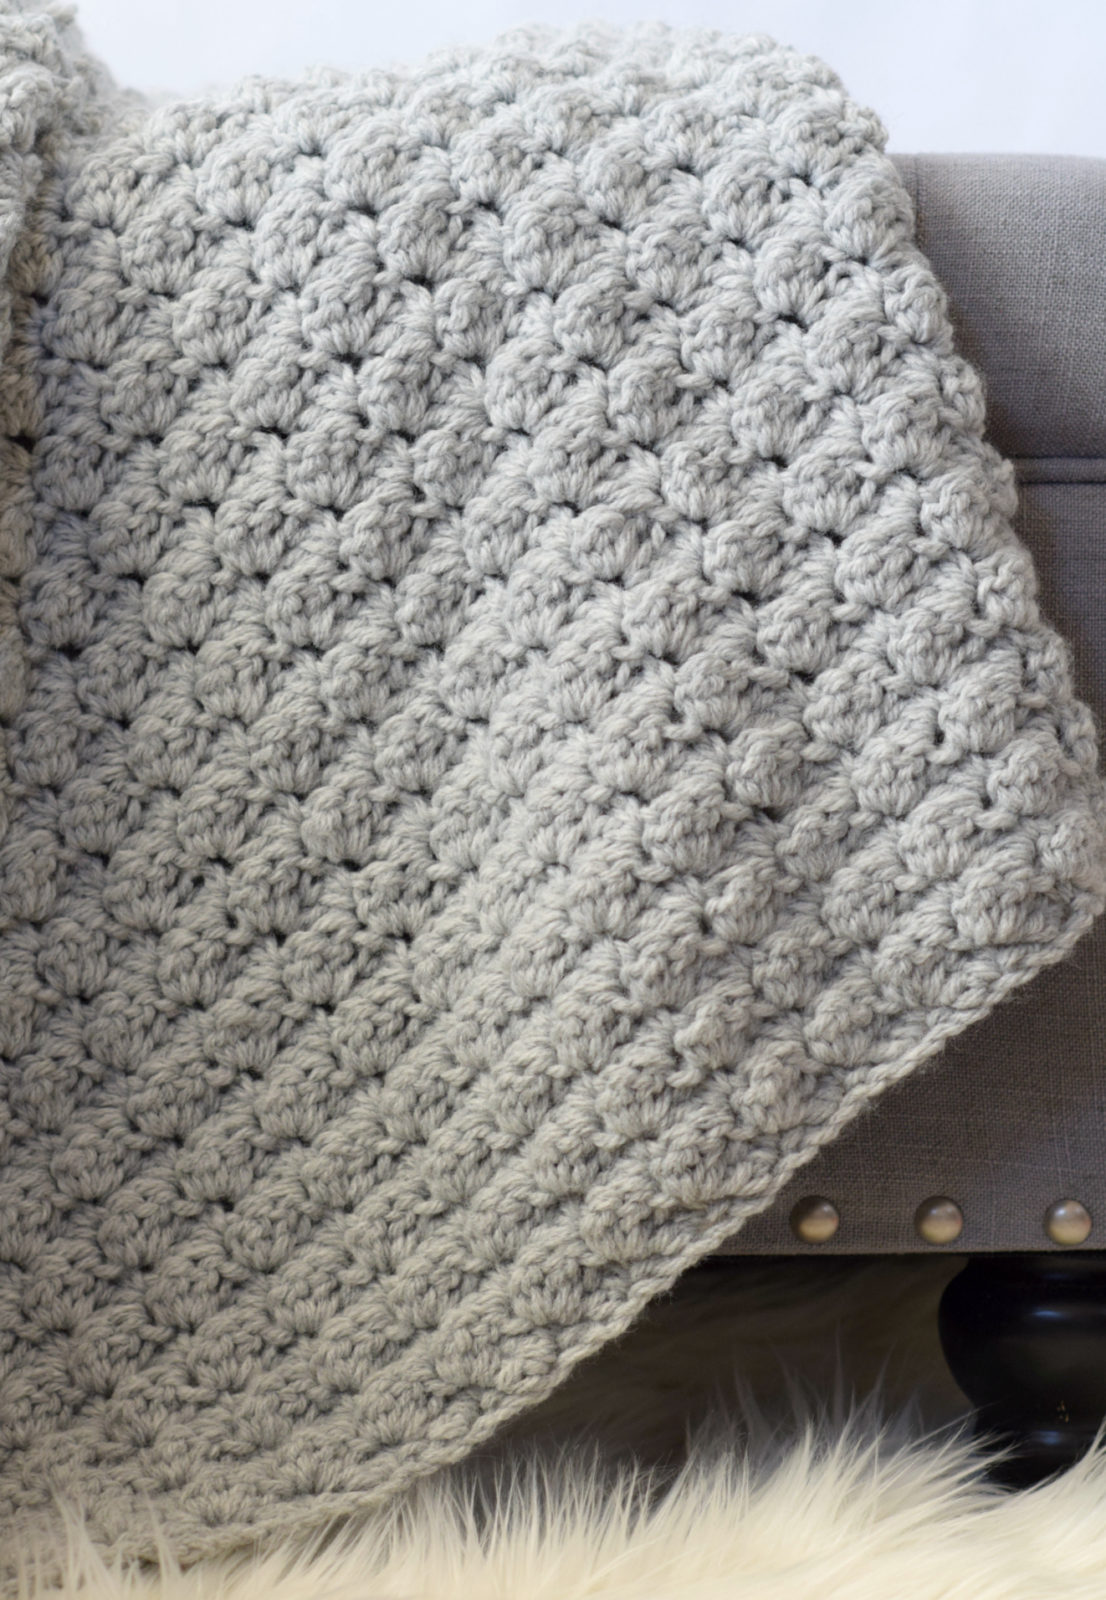 Beginner Quick and Easy Crochet Blanket Patterns - Easy Crochet Patterns